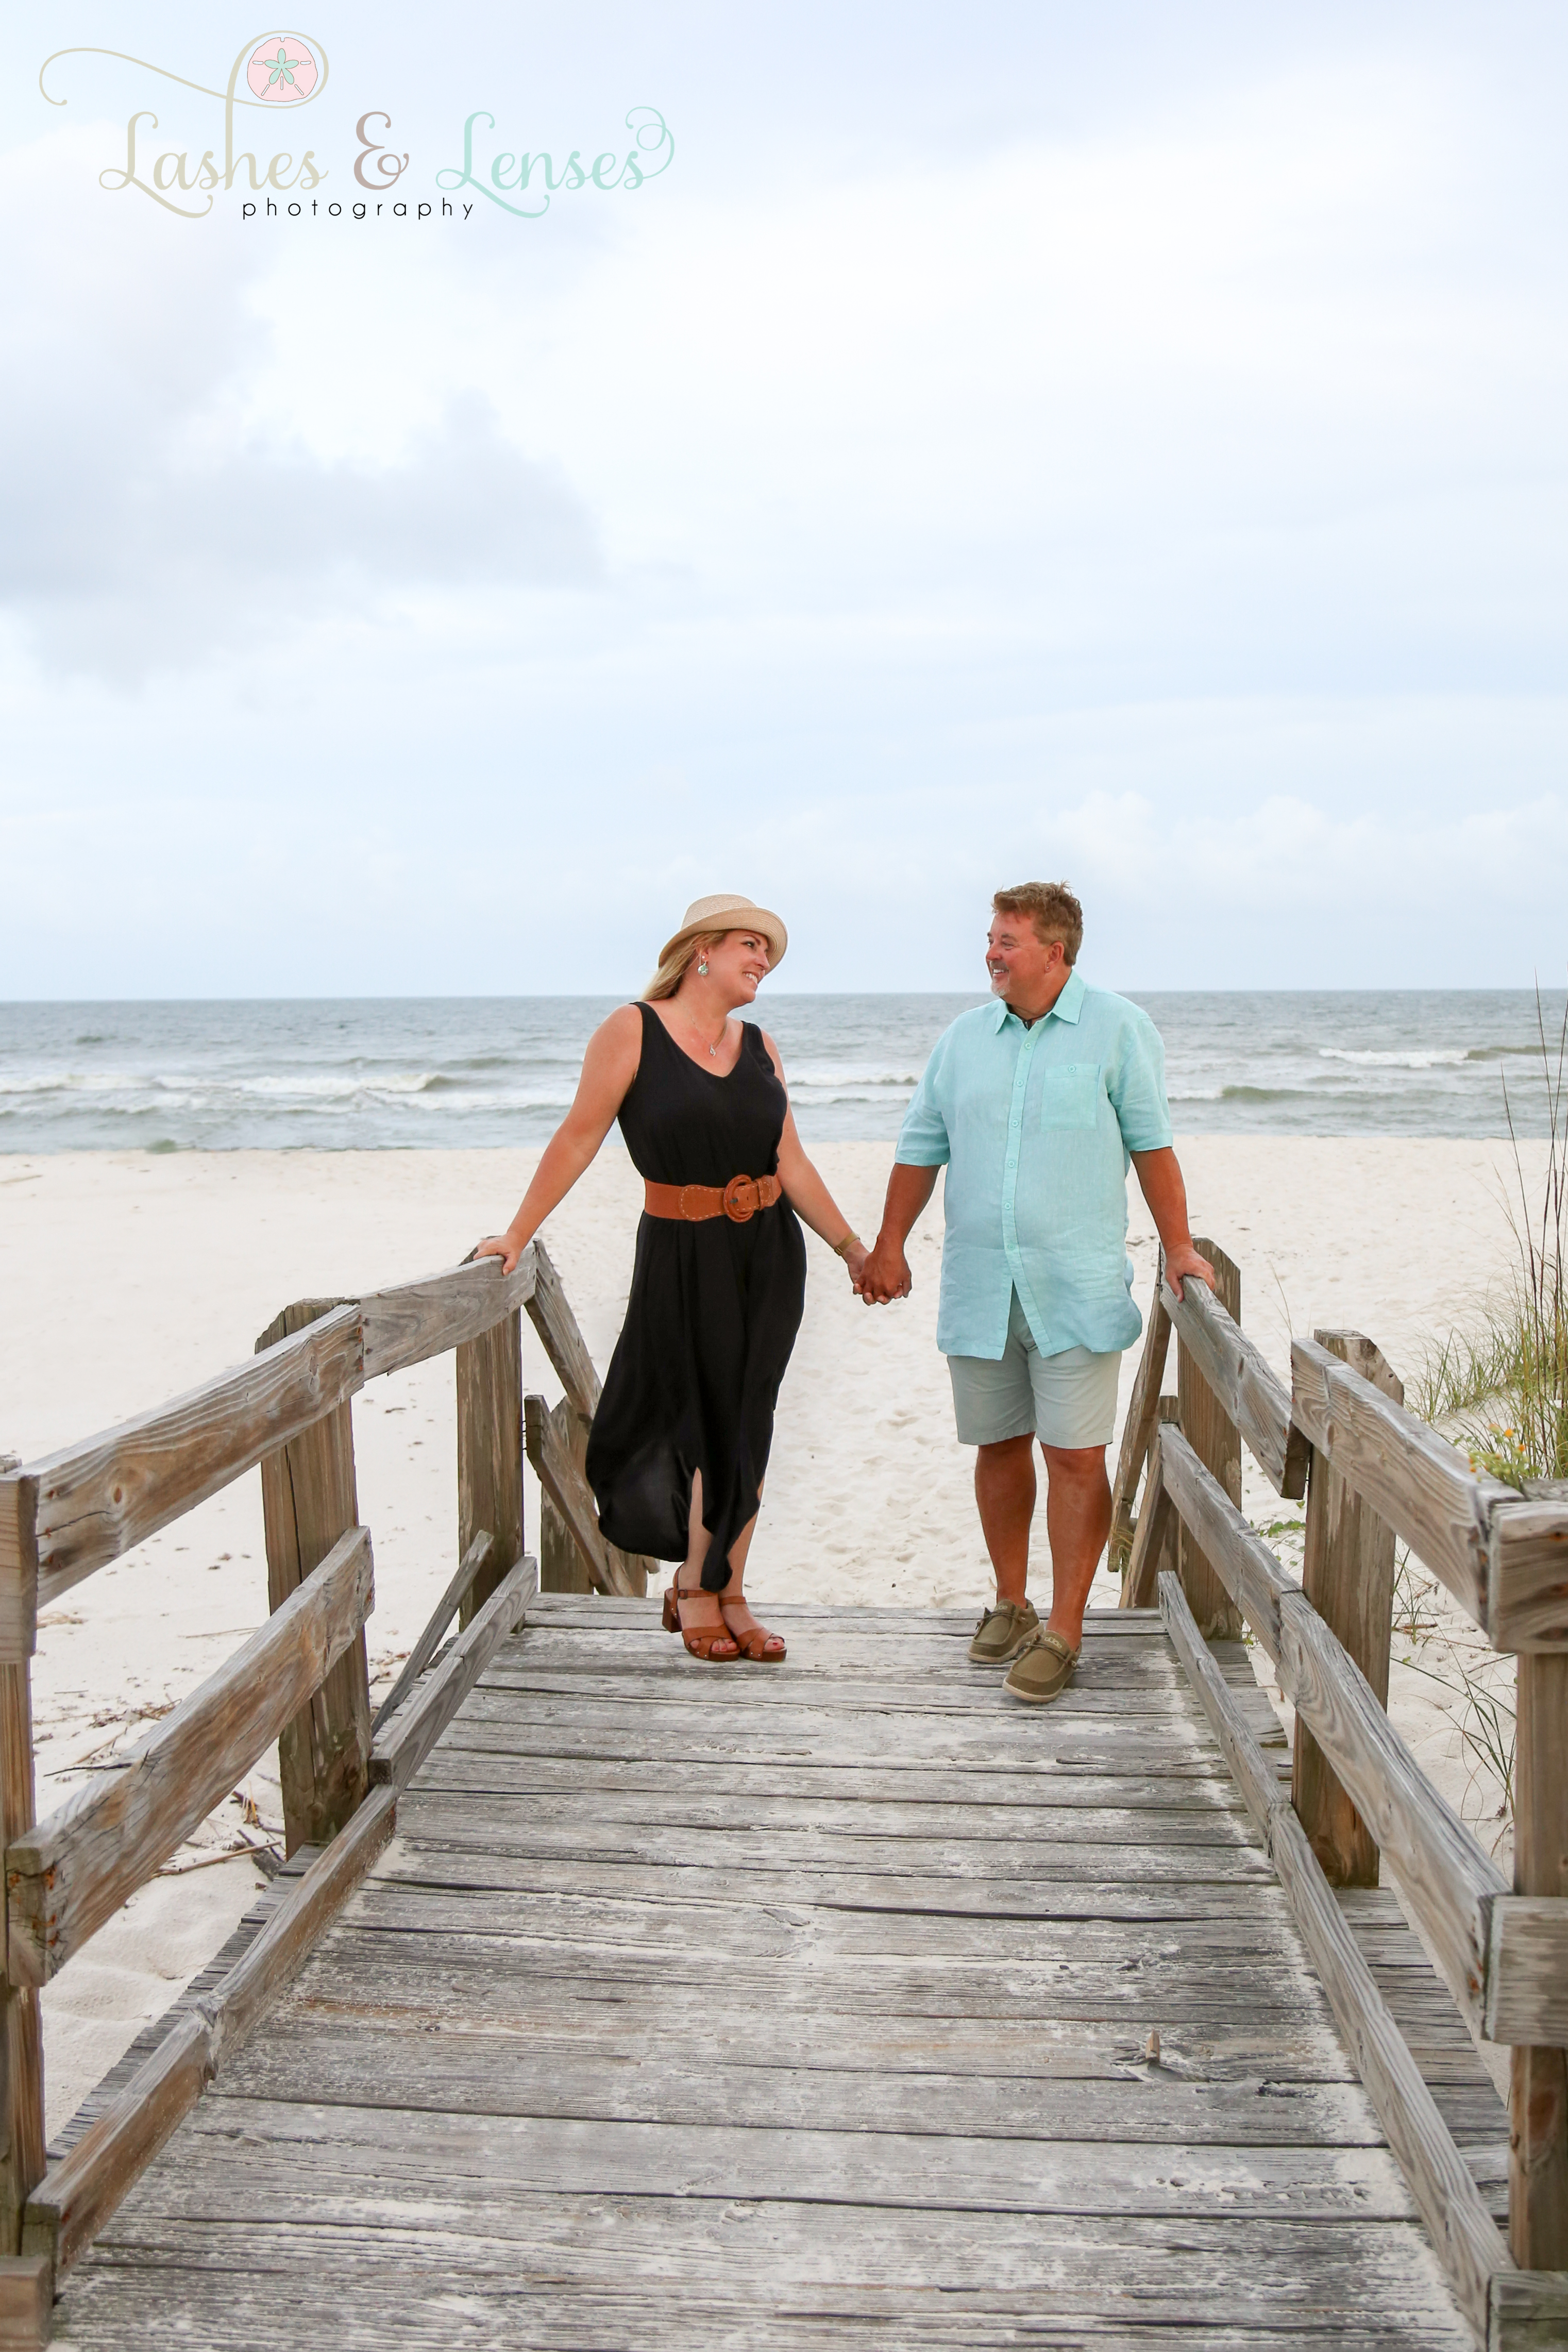 Husband and Wife on boardwalk at Johnsons Beach Perdido Key